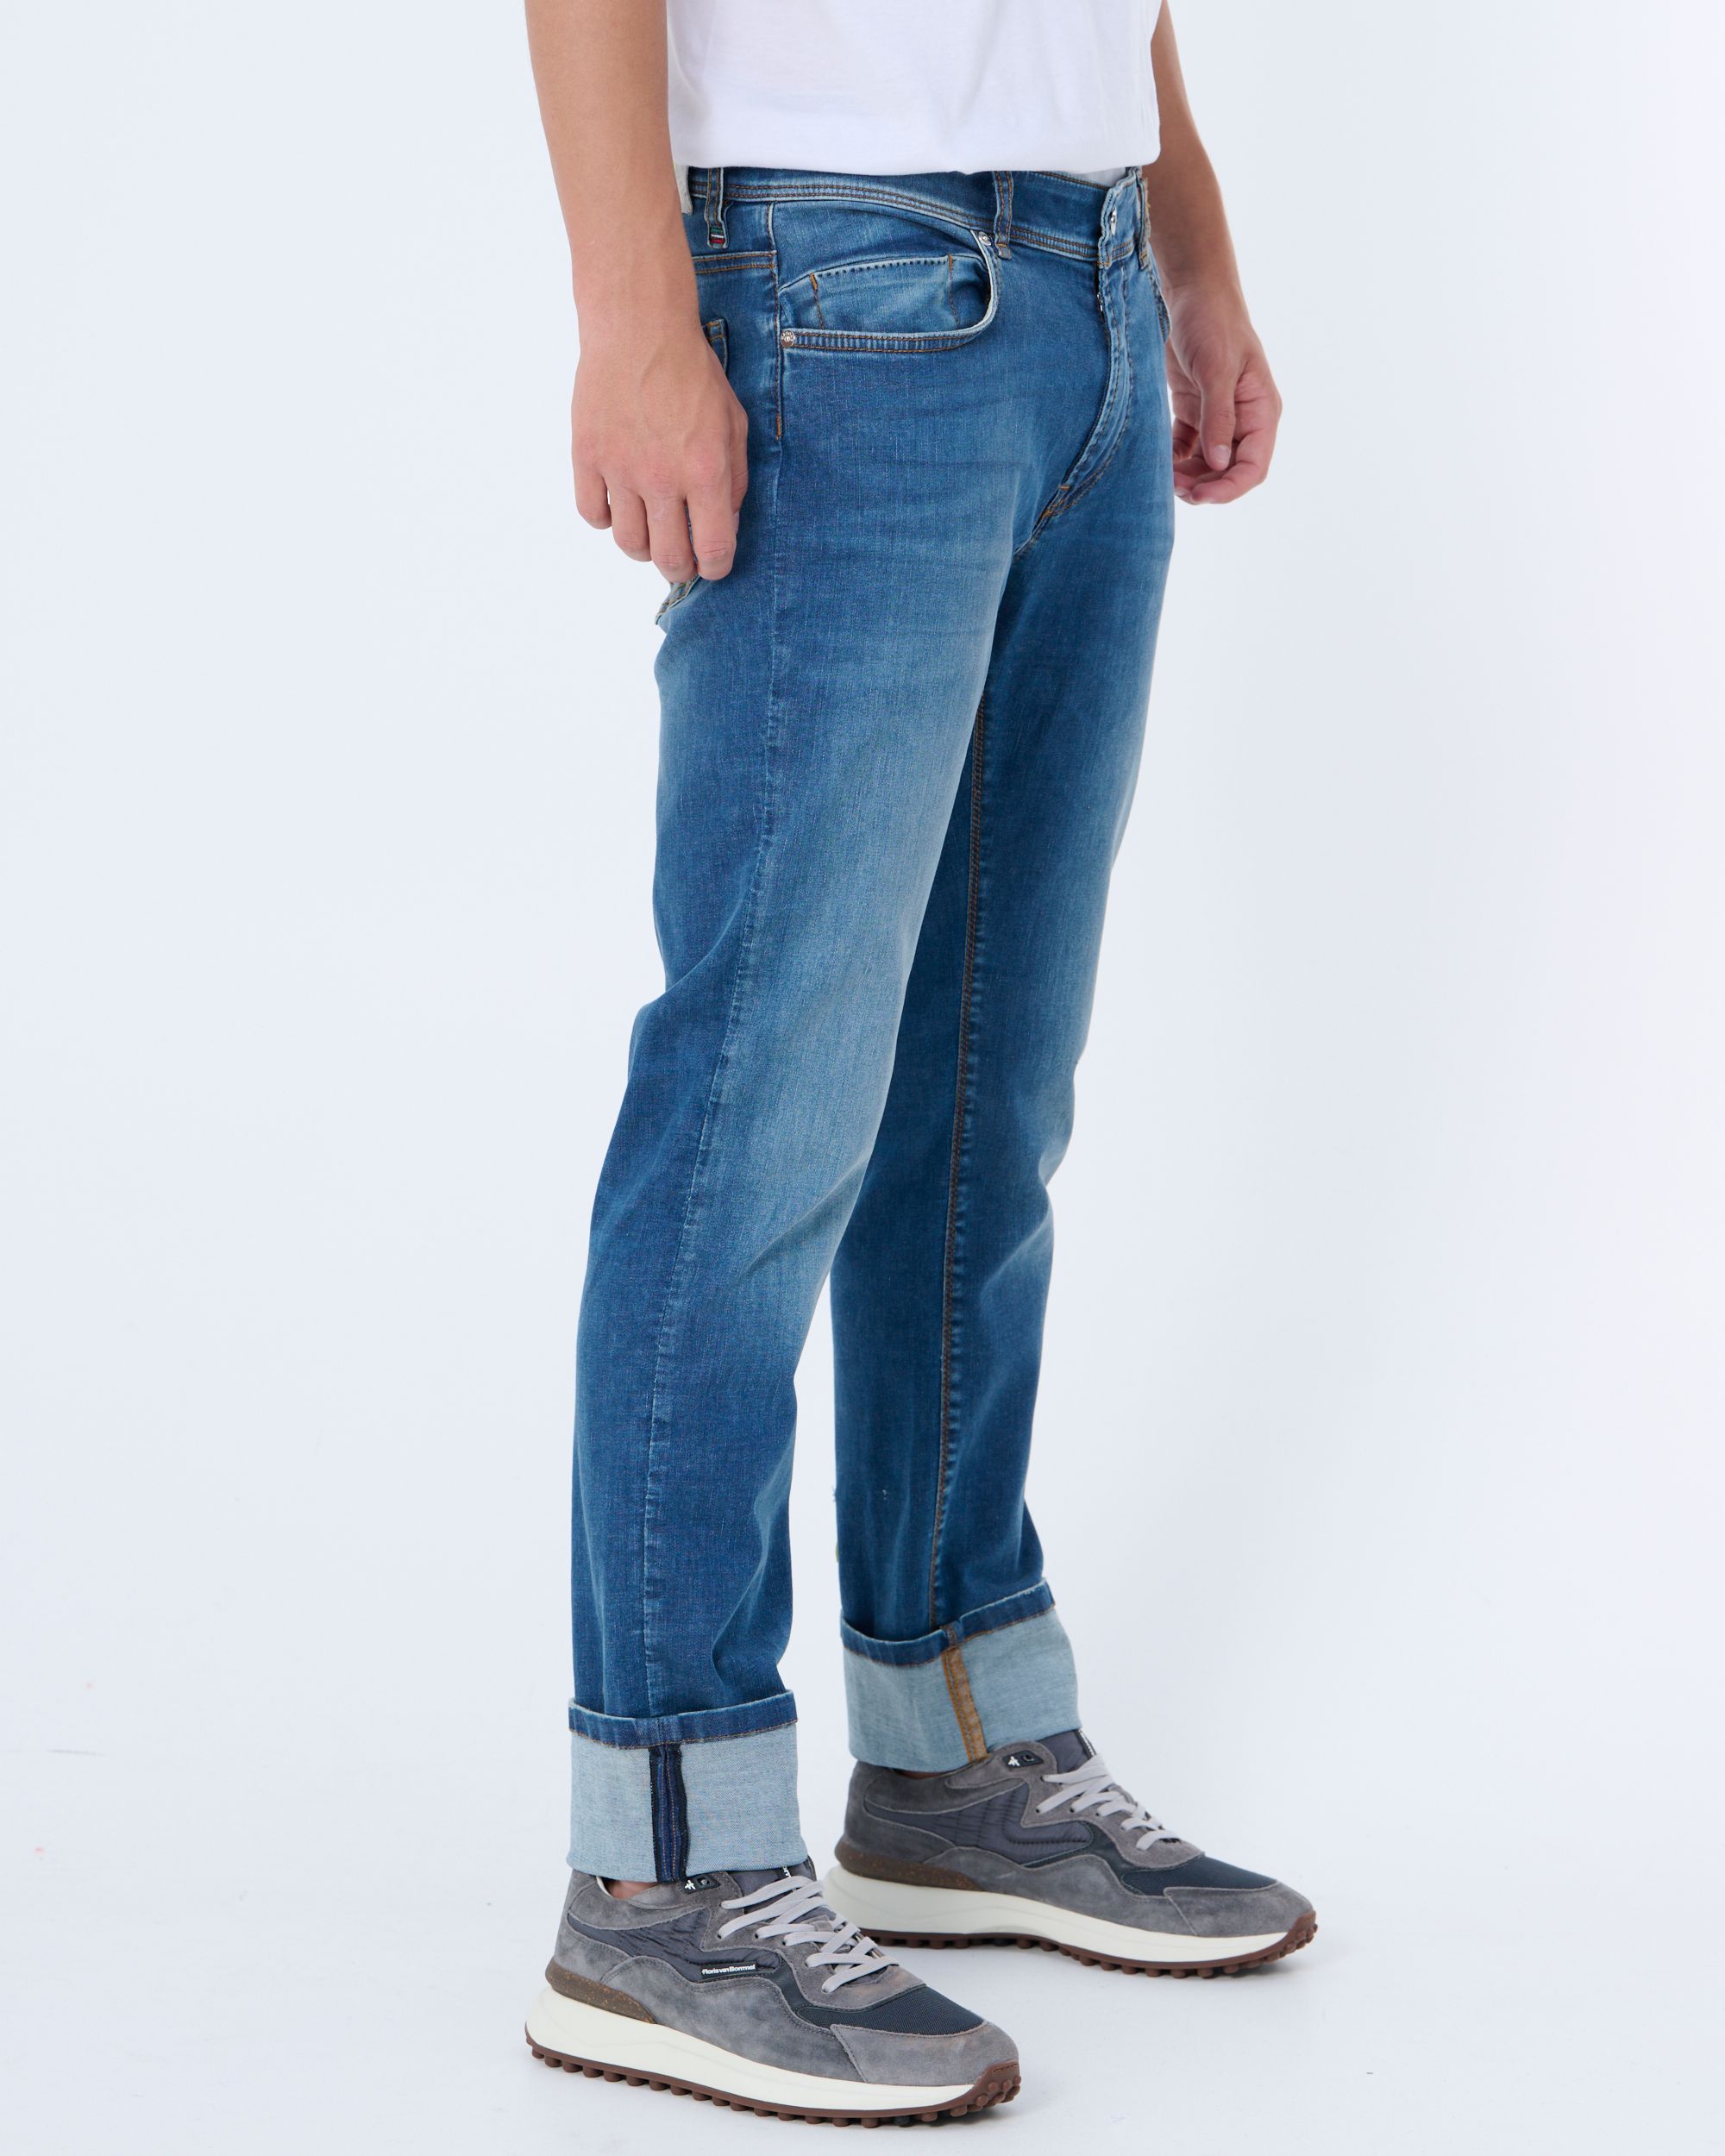 Mason's Jeans Blauw 088145-001-31